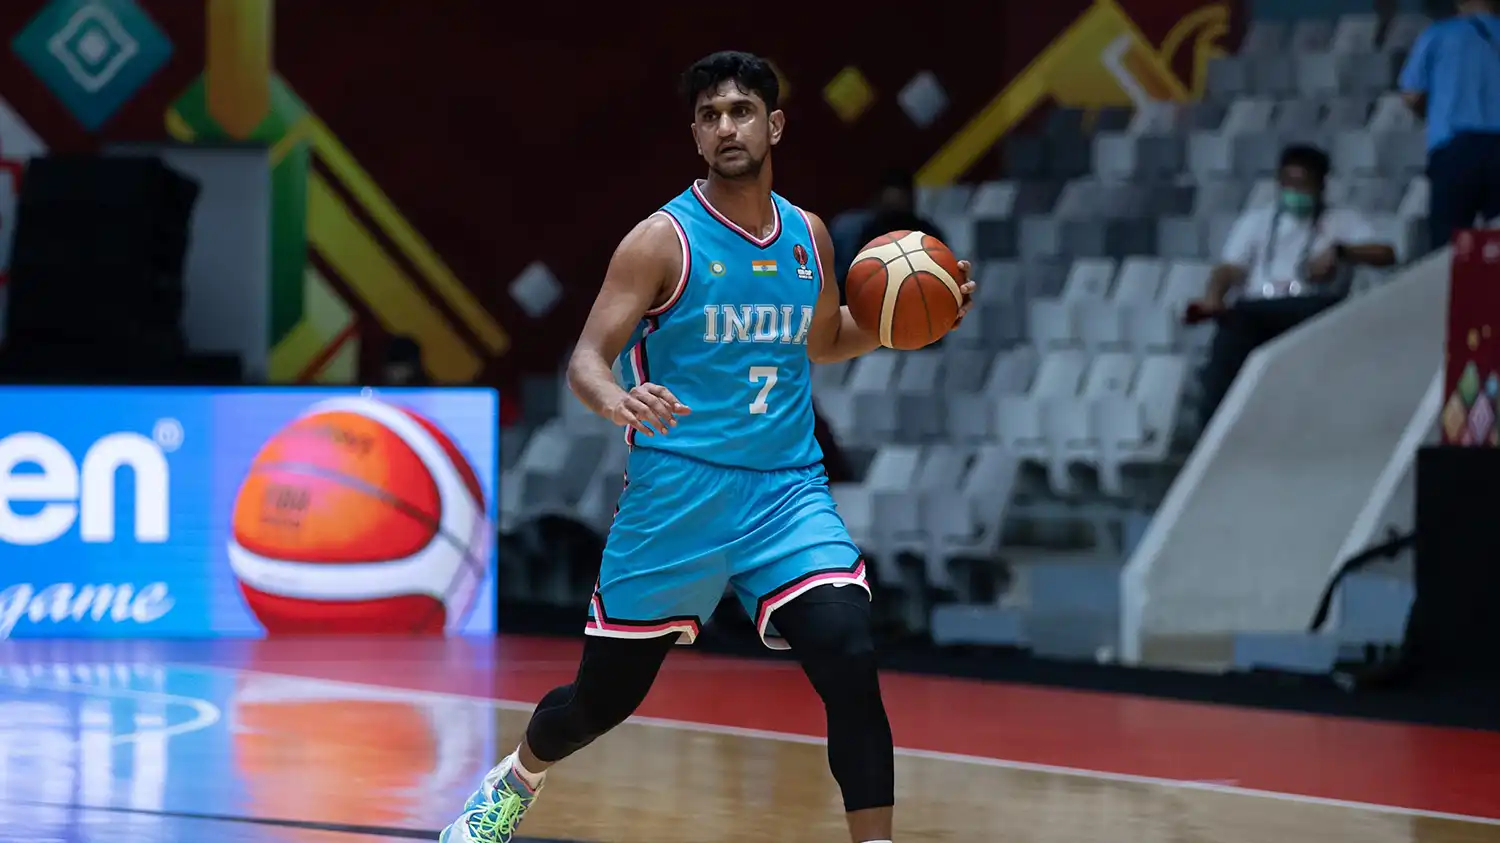 India’s Growing Presence in International Basketball